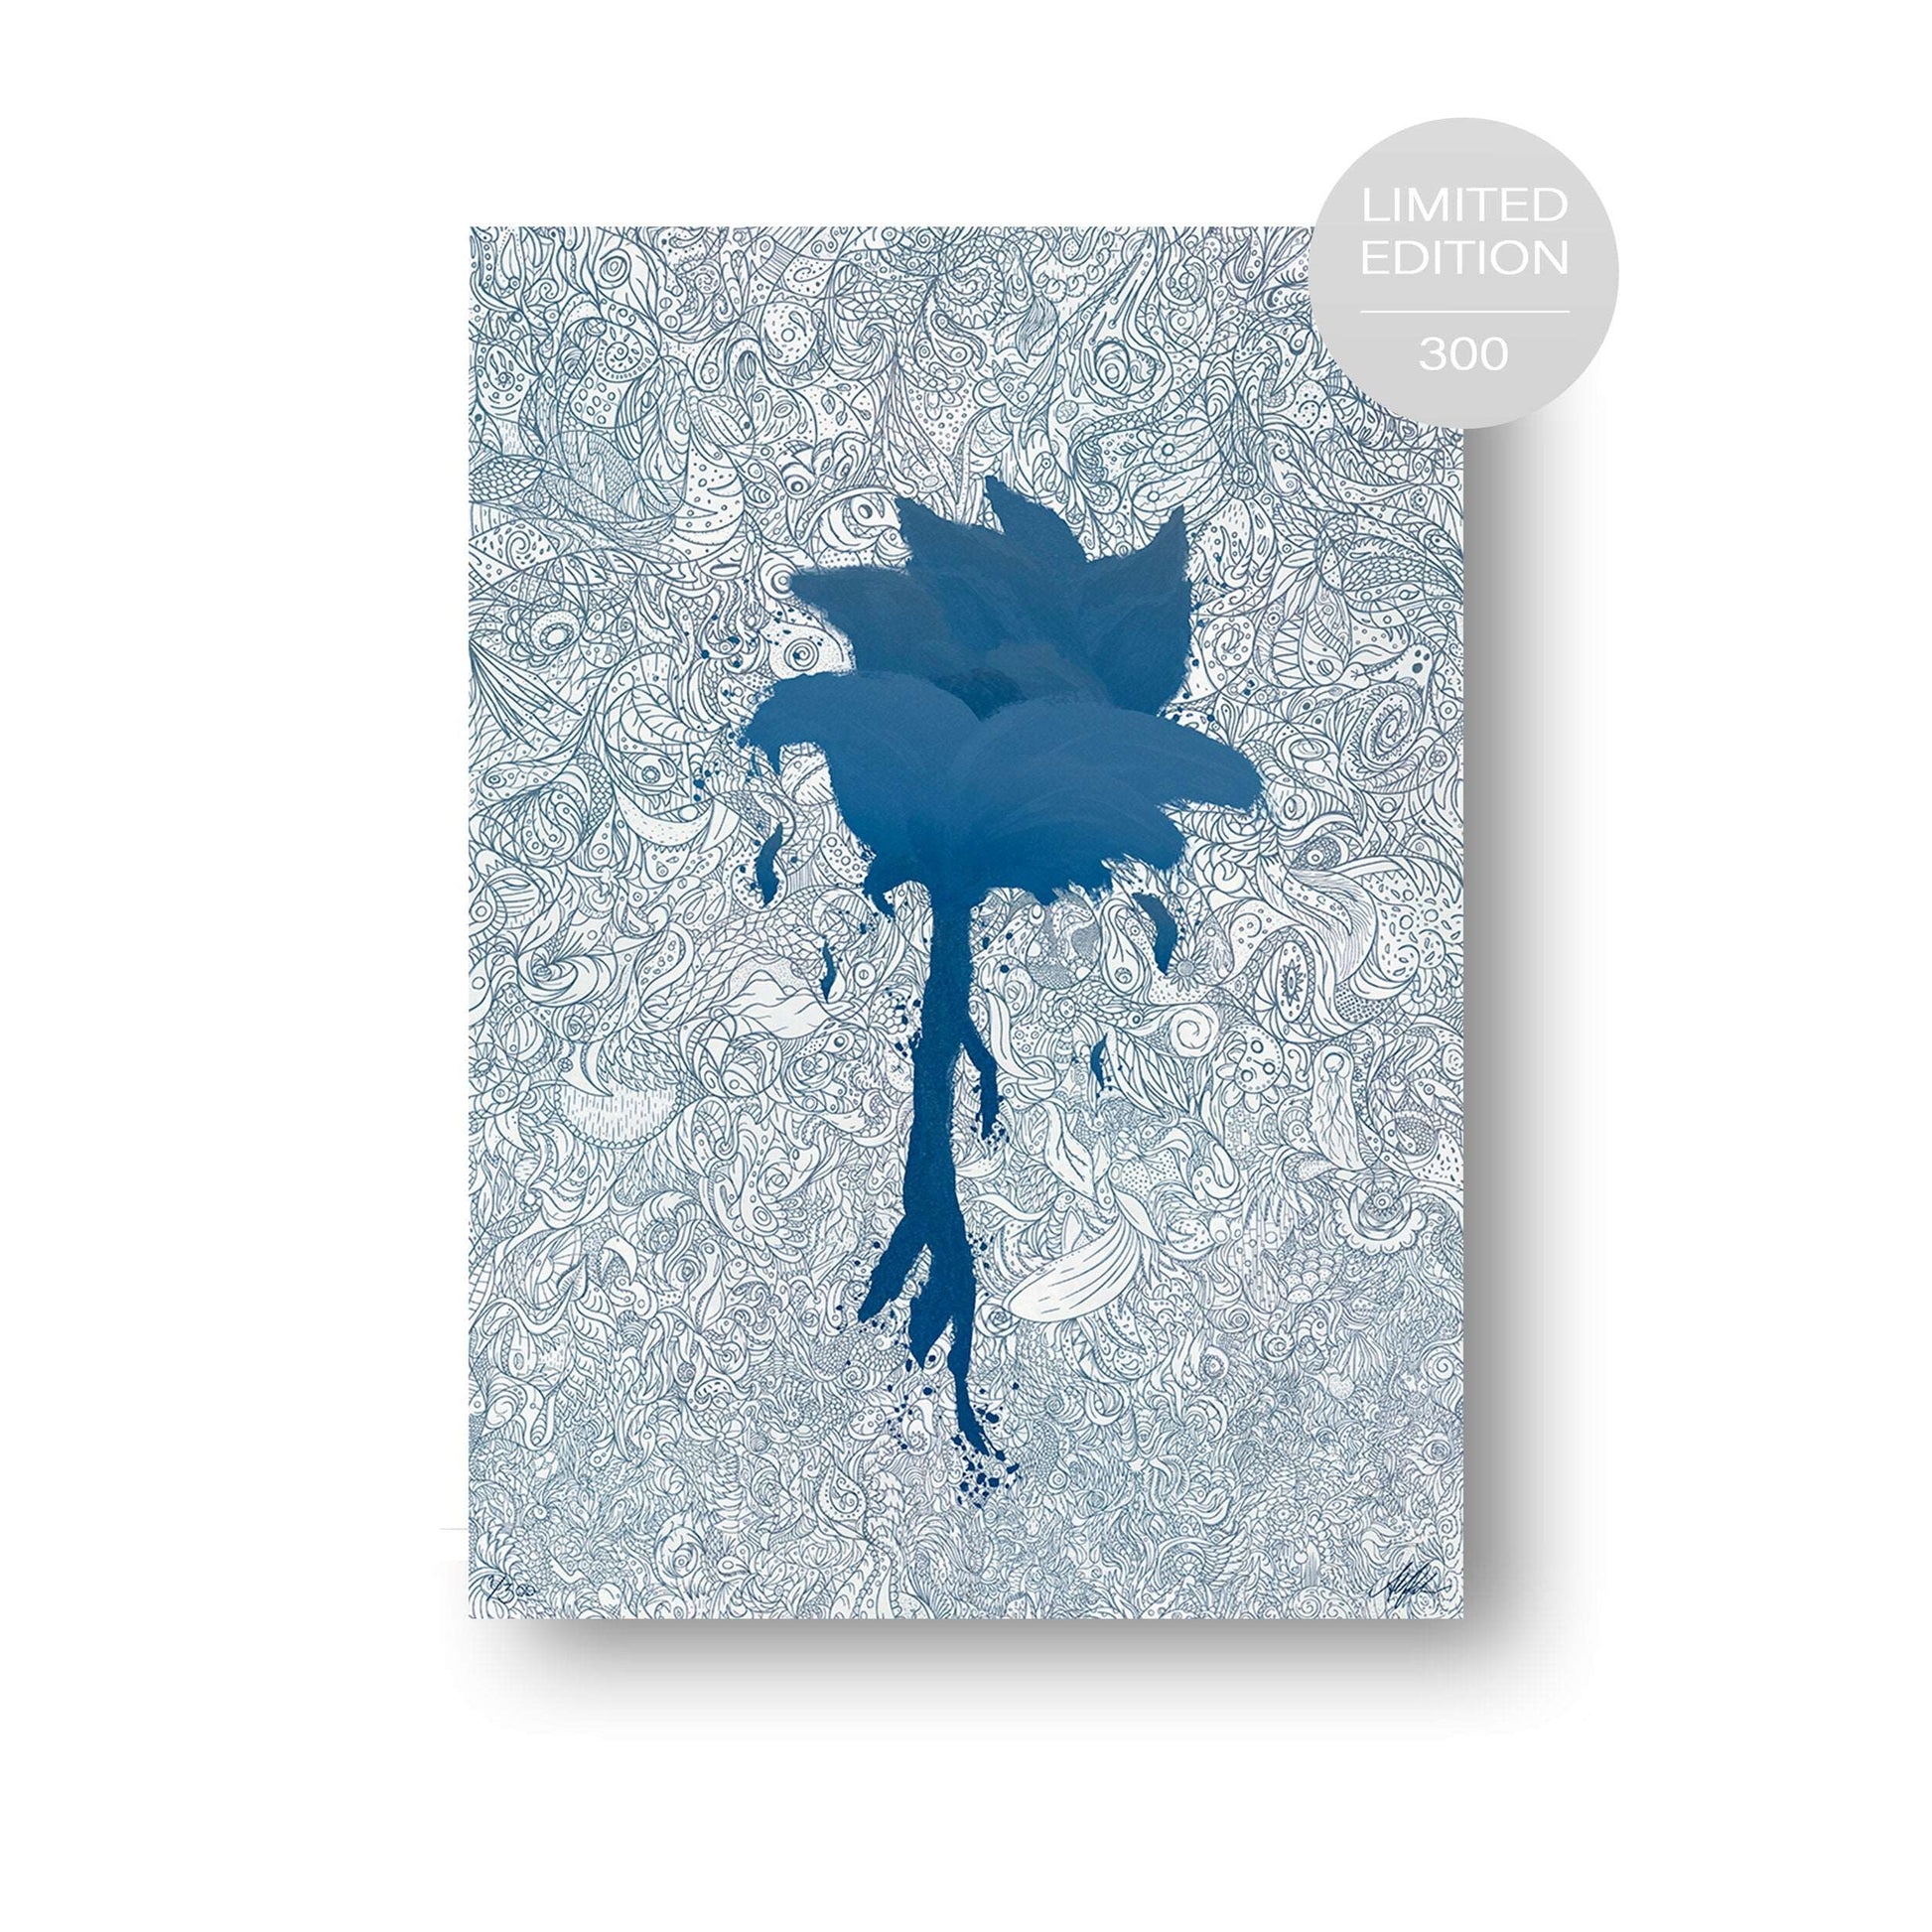 NOKUKO - Art - Alan Pedersen - ALANTHEROCK - Trust - Listen to me, myself - Limited edition 300 - Noble blue - print